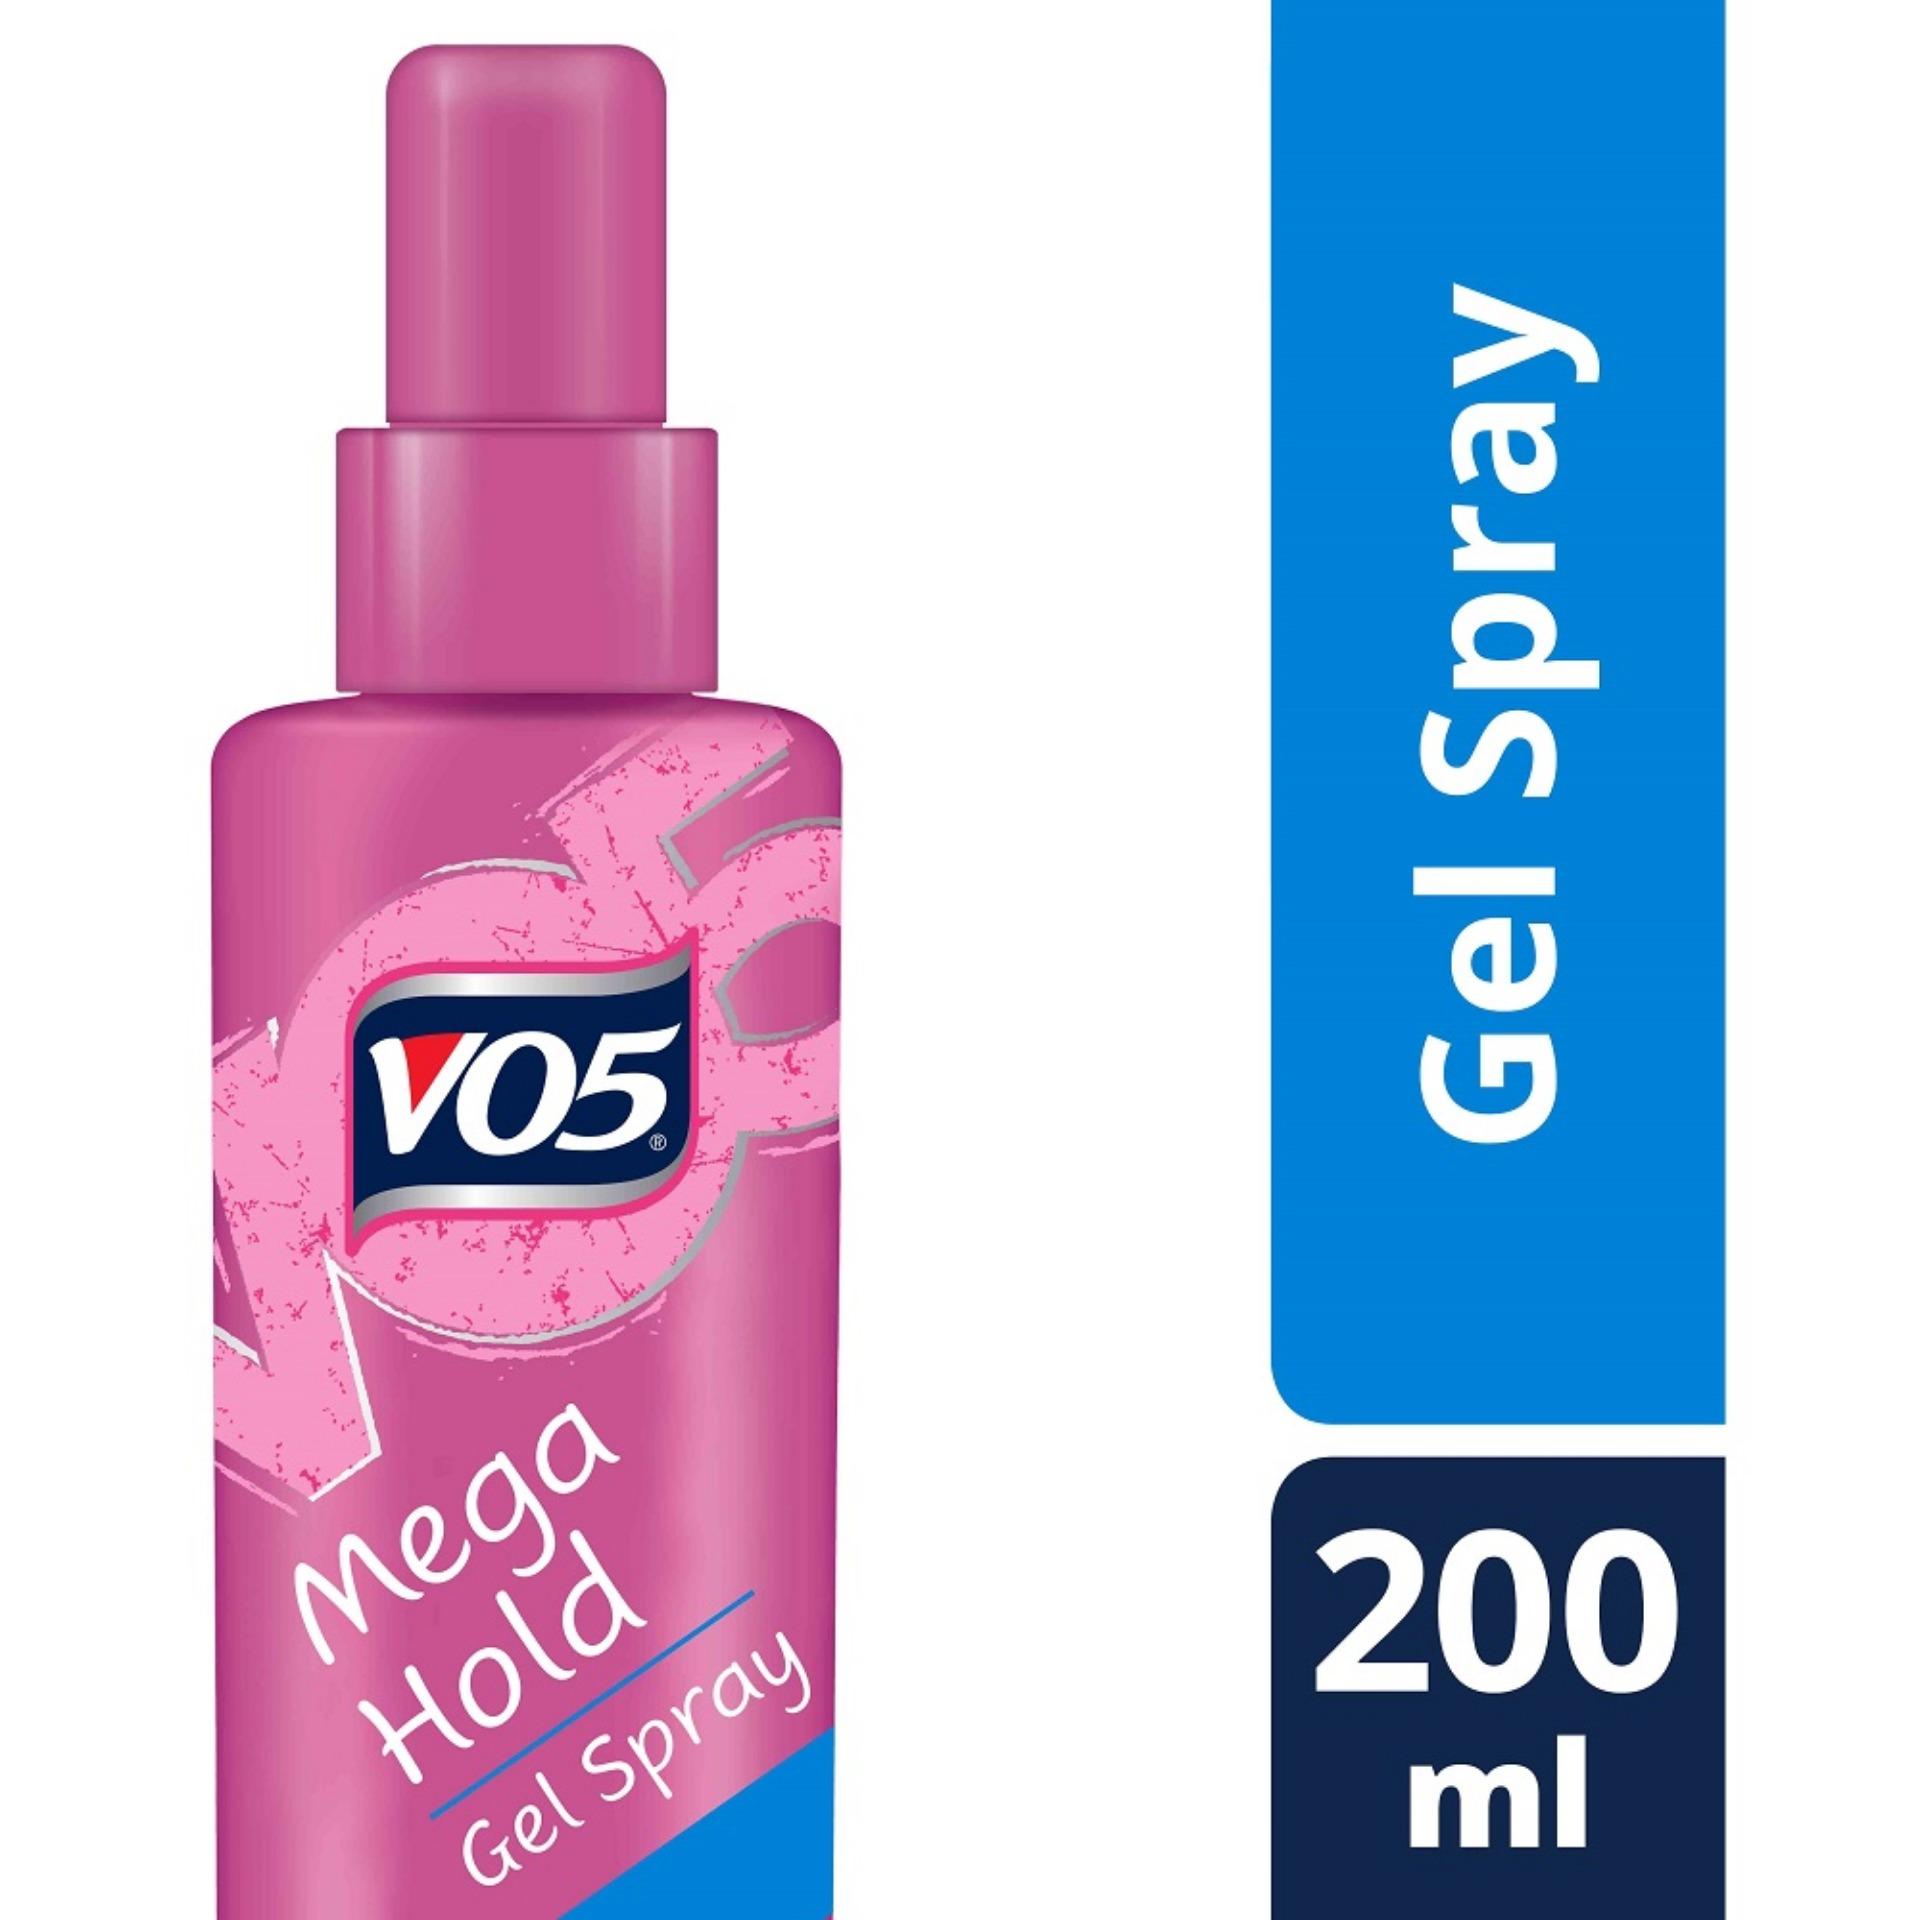 Reis duidelijk Vertrouwen op VO5 Mega Hold Gel Spray 200ml review and price